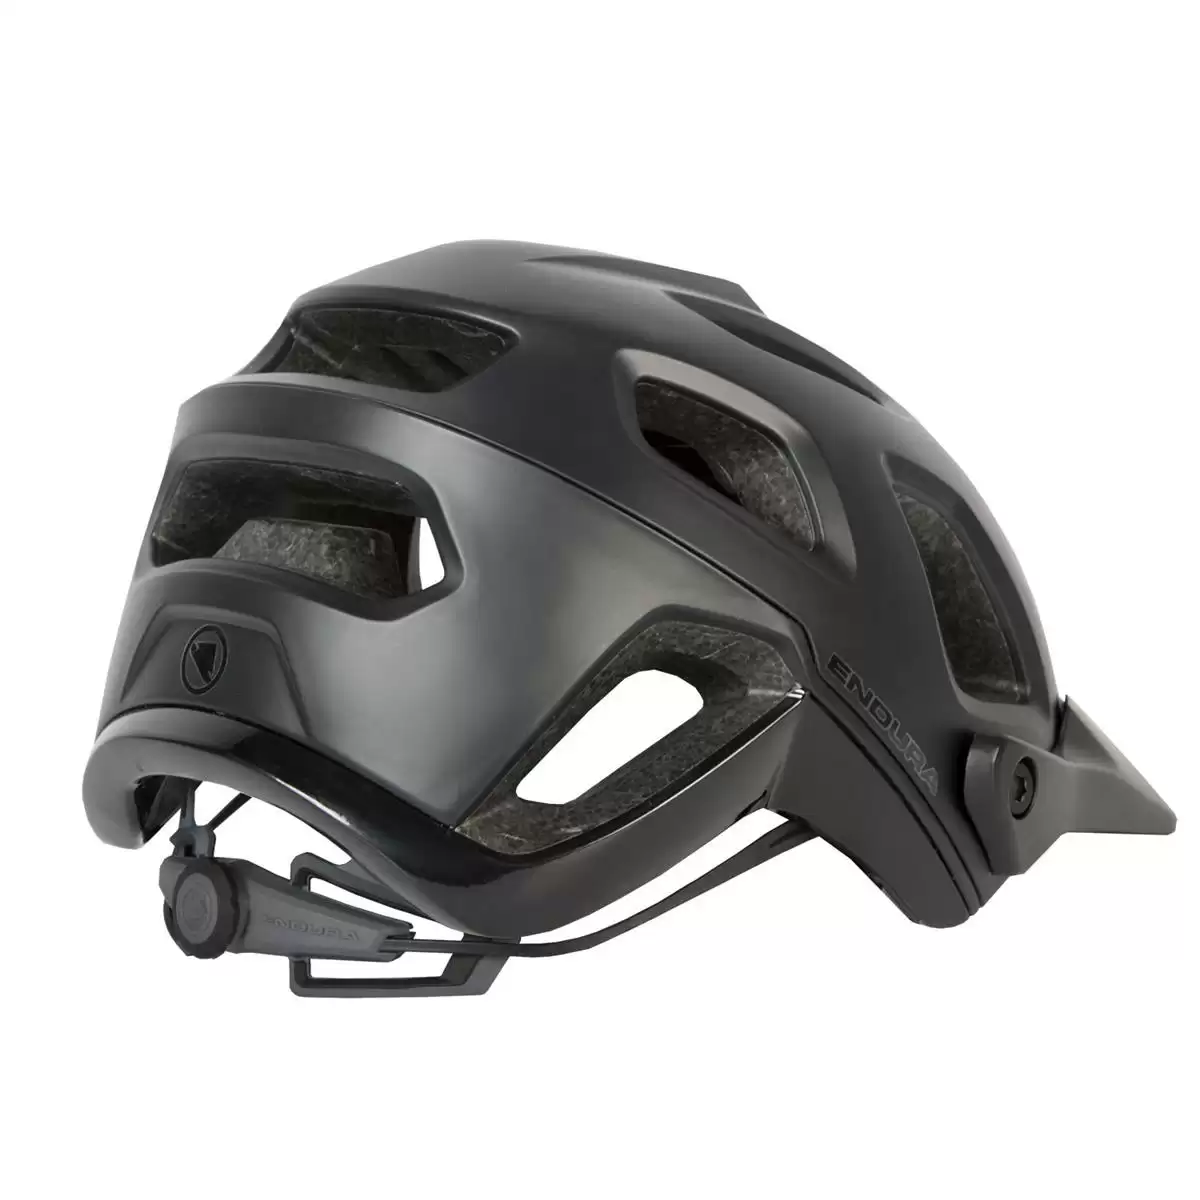 helmet SingleTrack Helmet II black size M/L (55-59cm) #1